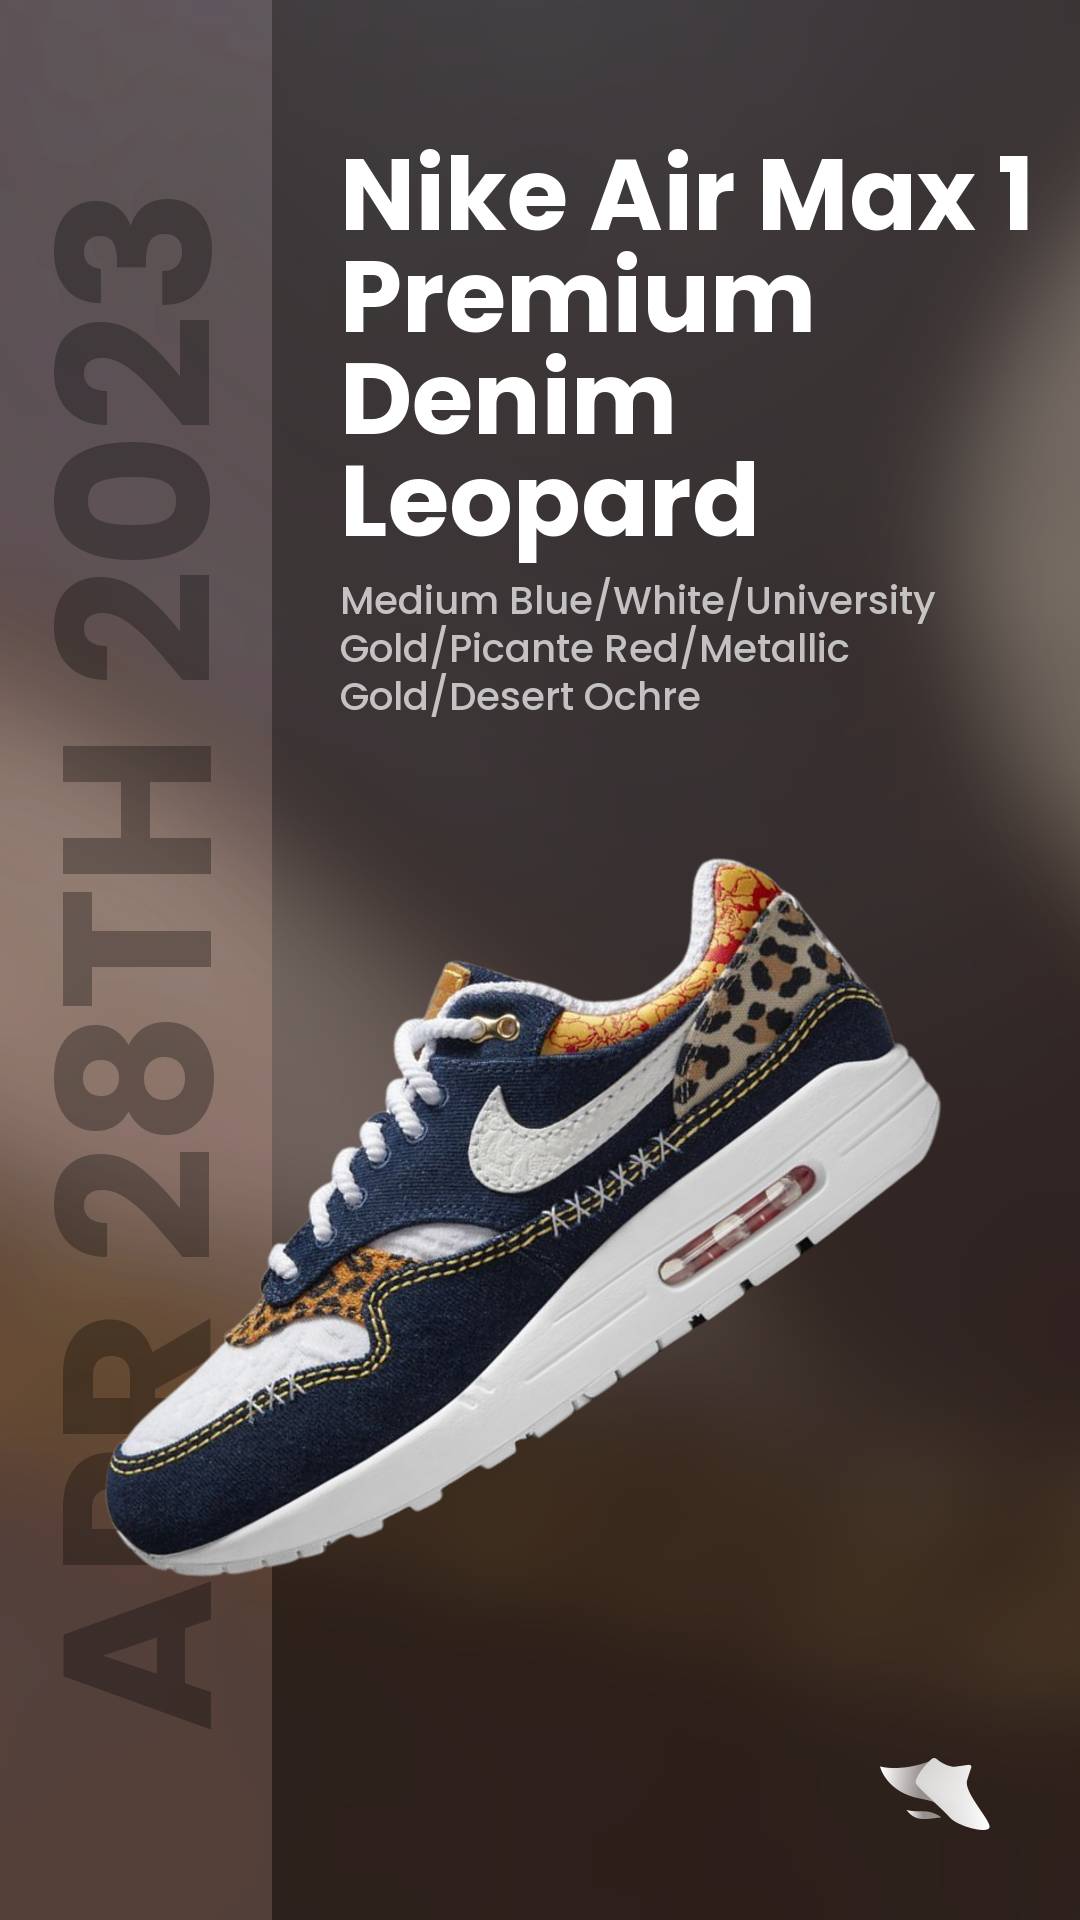 Nike Air Max 1 Premium Denim Leopard | Release Information